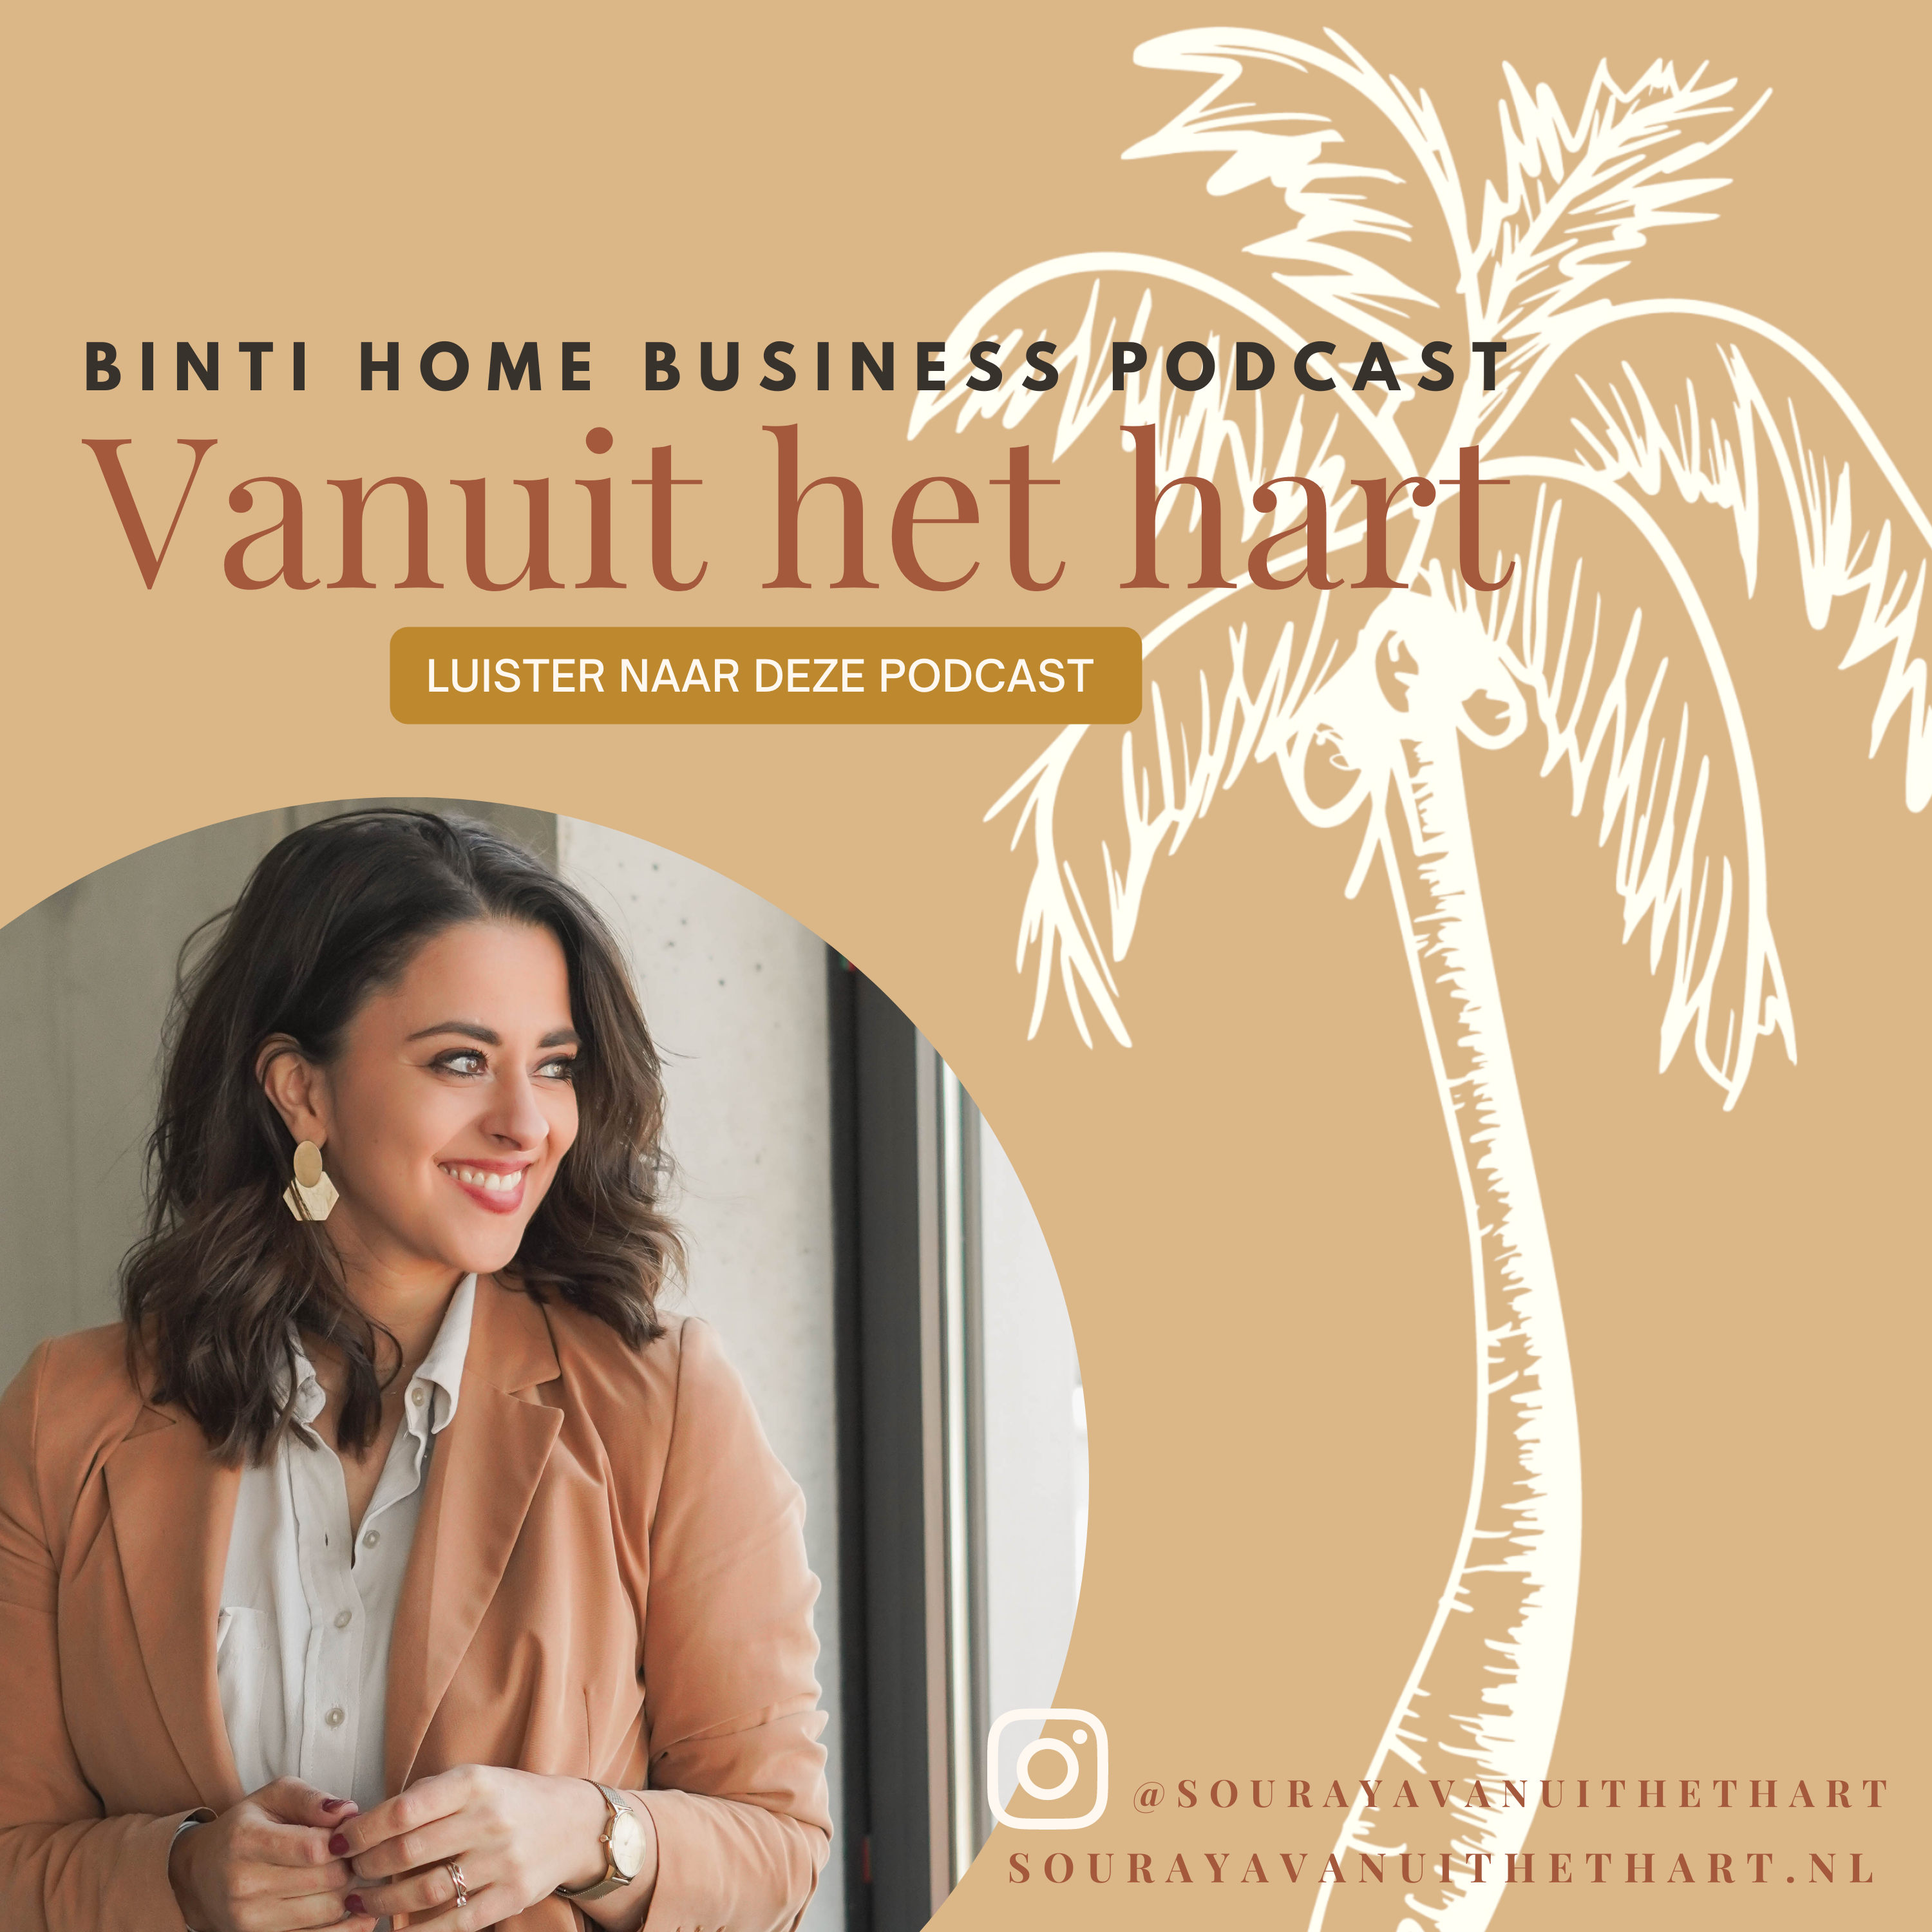 Binti Home Business podcast